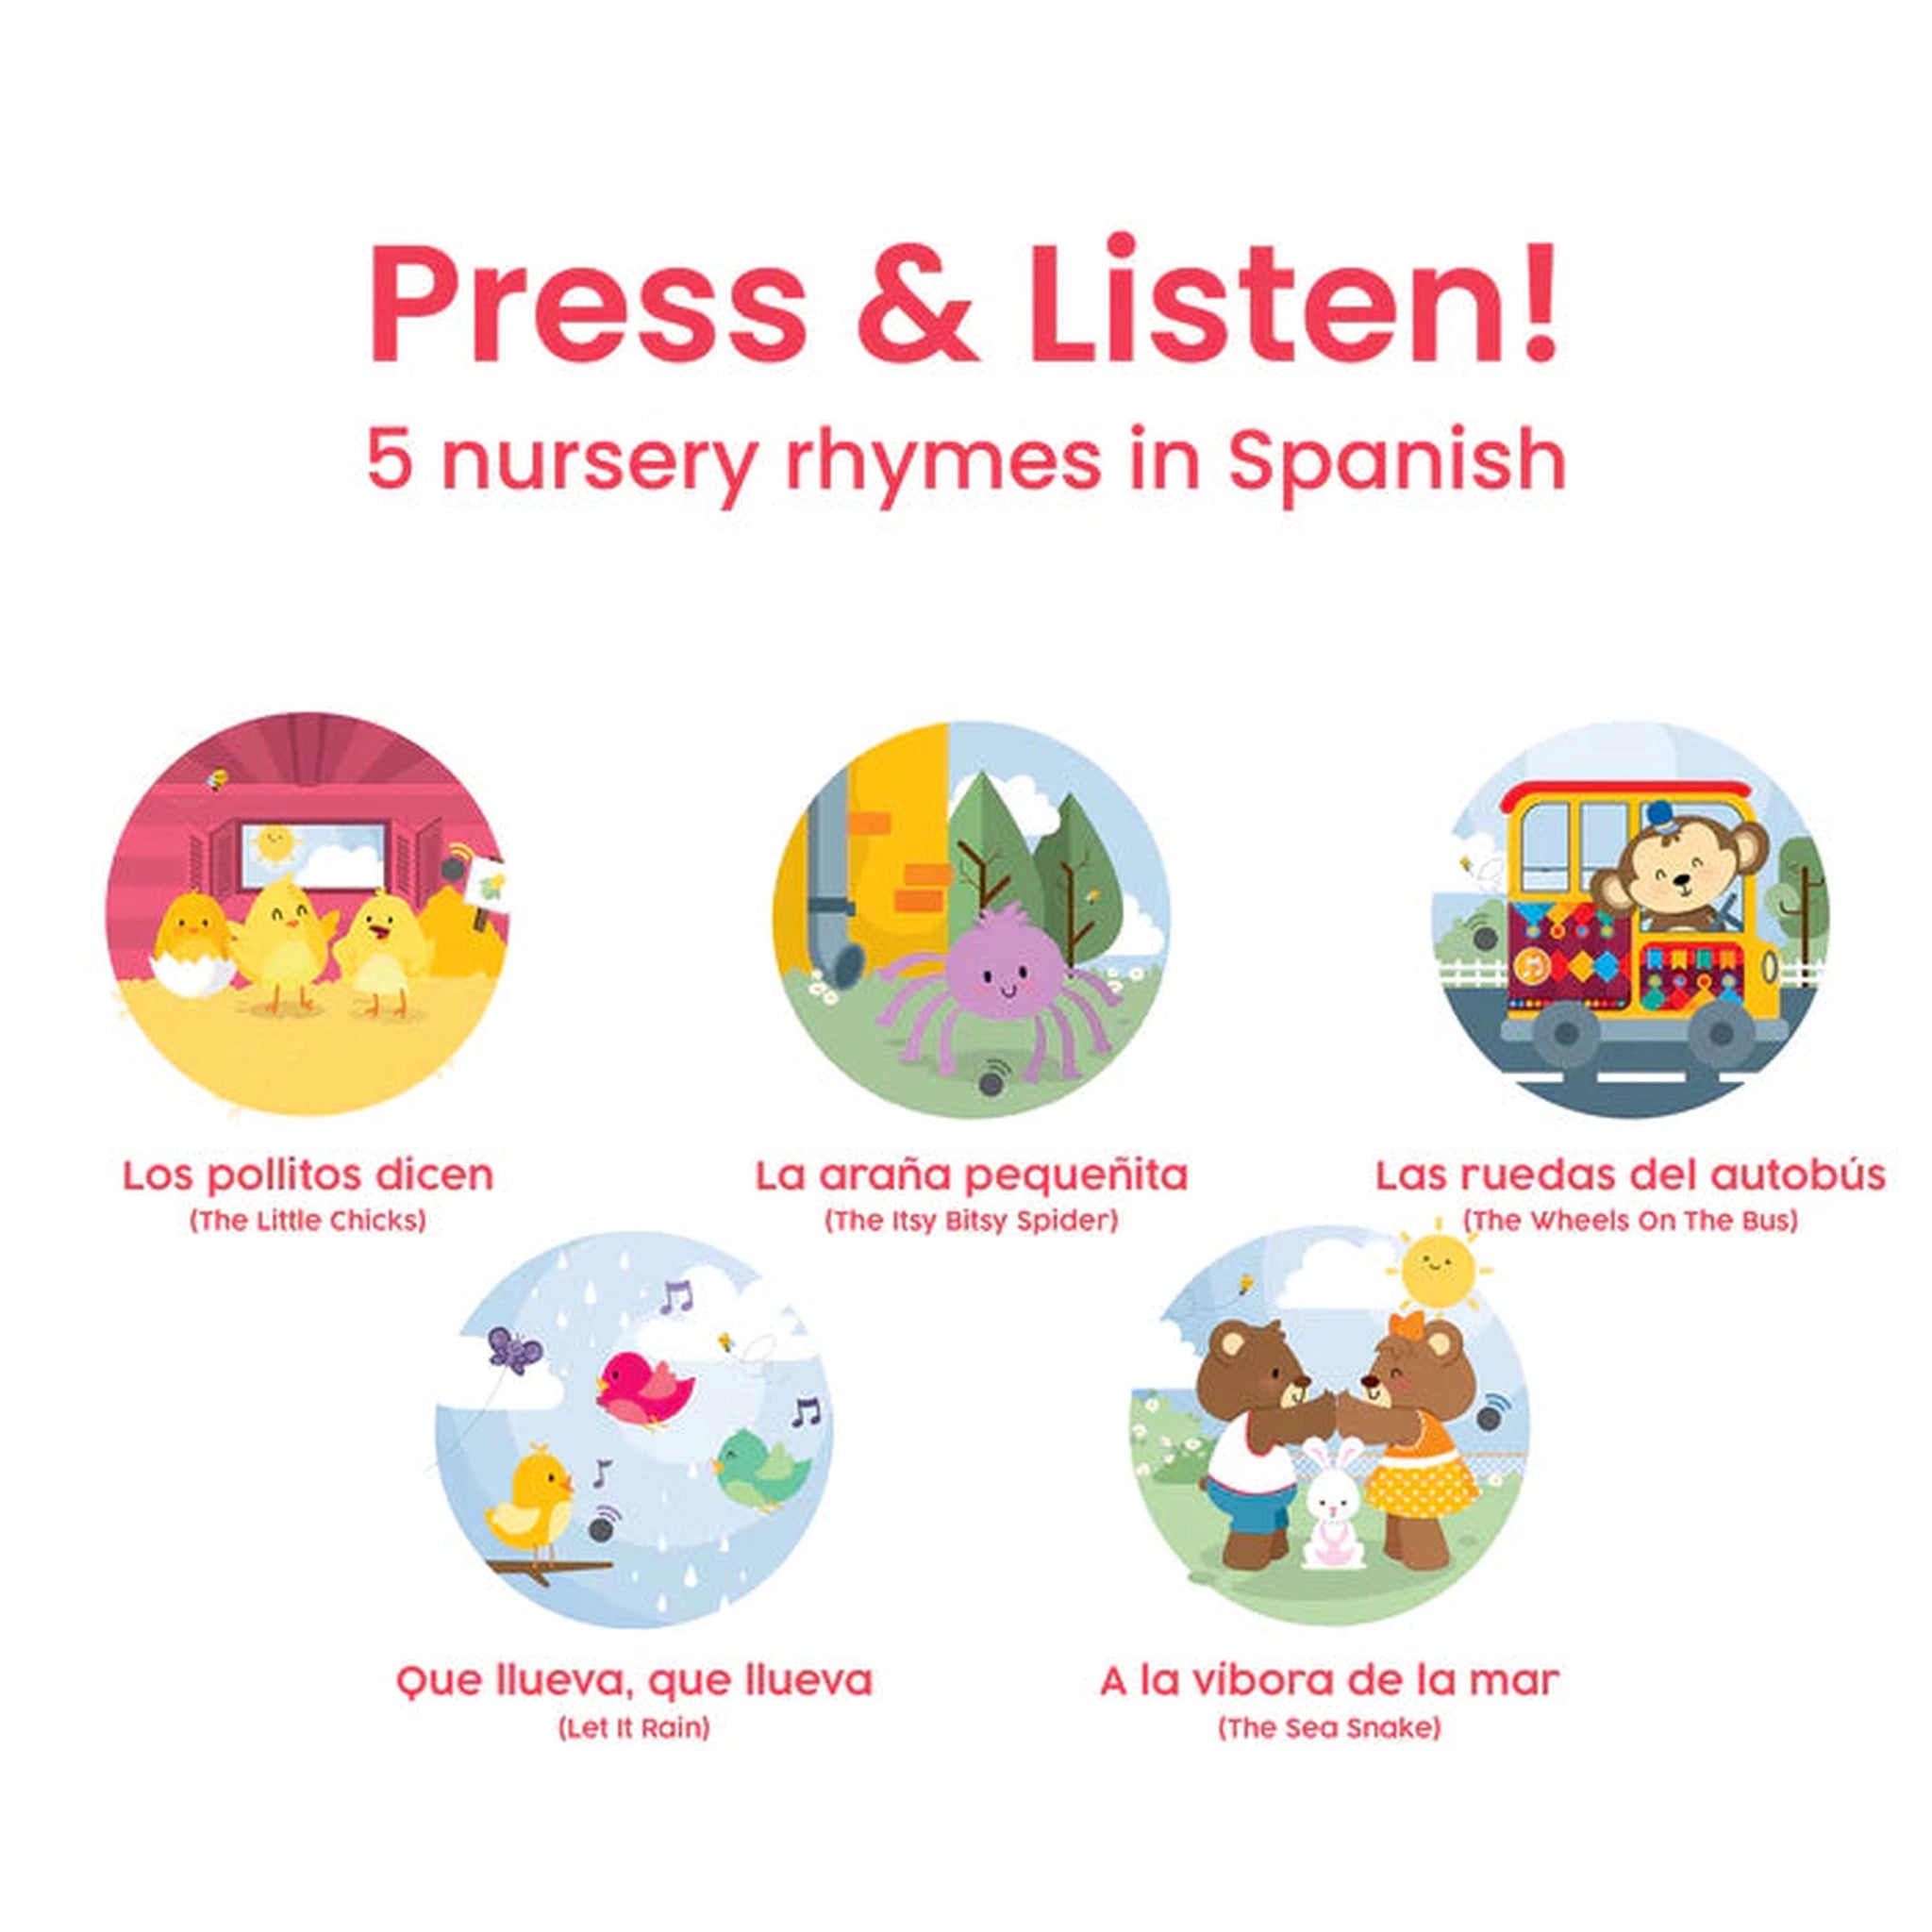 Los Pollitos Dicen & Other Nursery Rhymes Musical Book